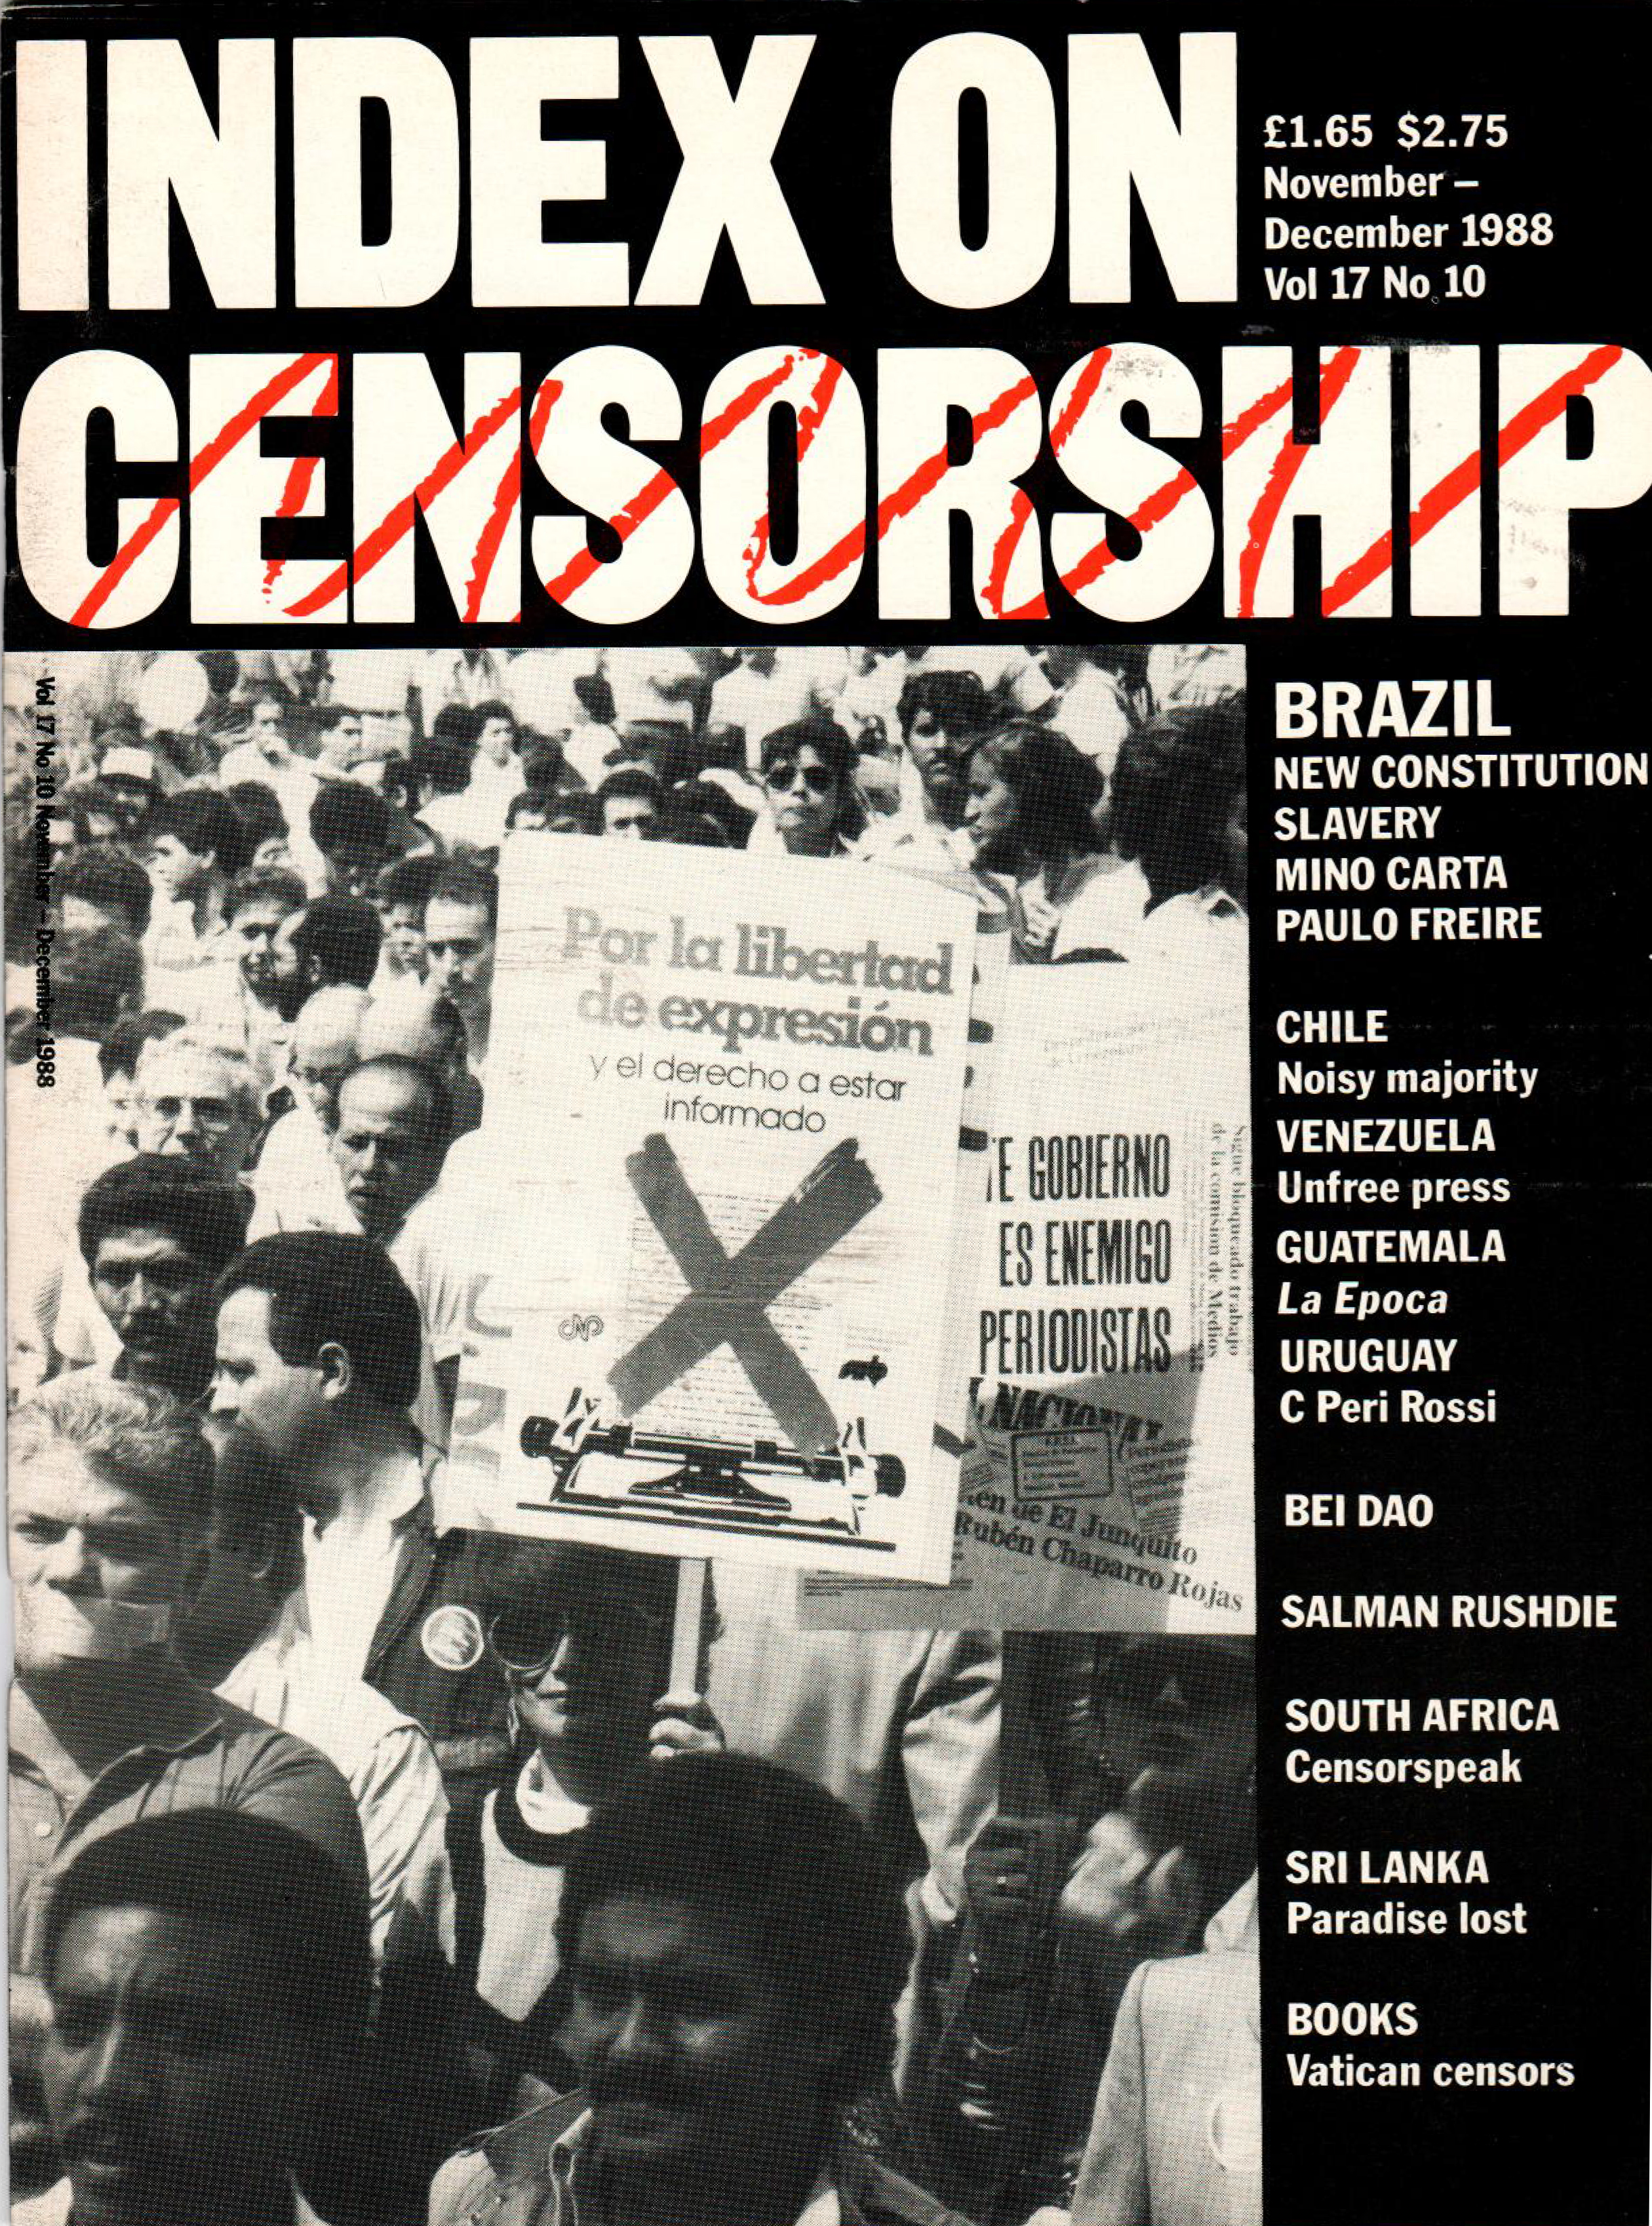 Brazil: New constitition slavery, the November-December 1988 issue of Index on Censorship magazine.